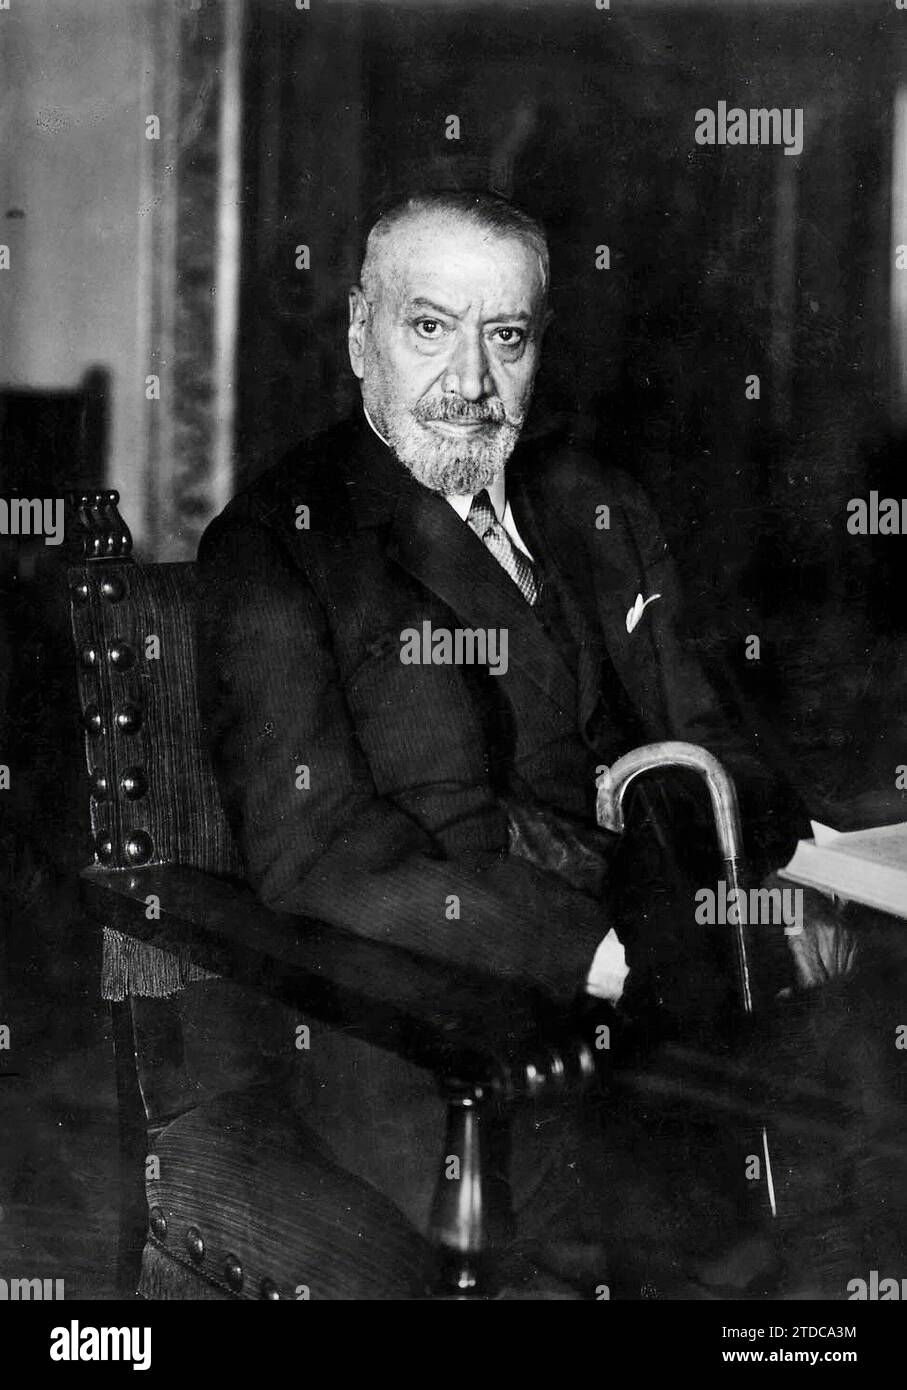 12/31/1929. José Francos Rodríguez. Crediti: Album / Archivo ABC Foto Stock